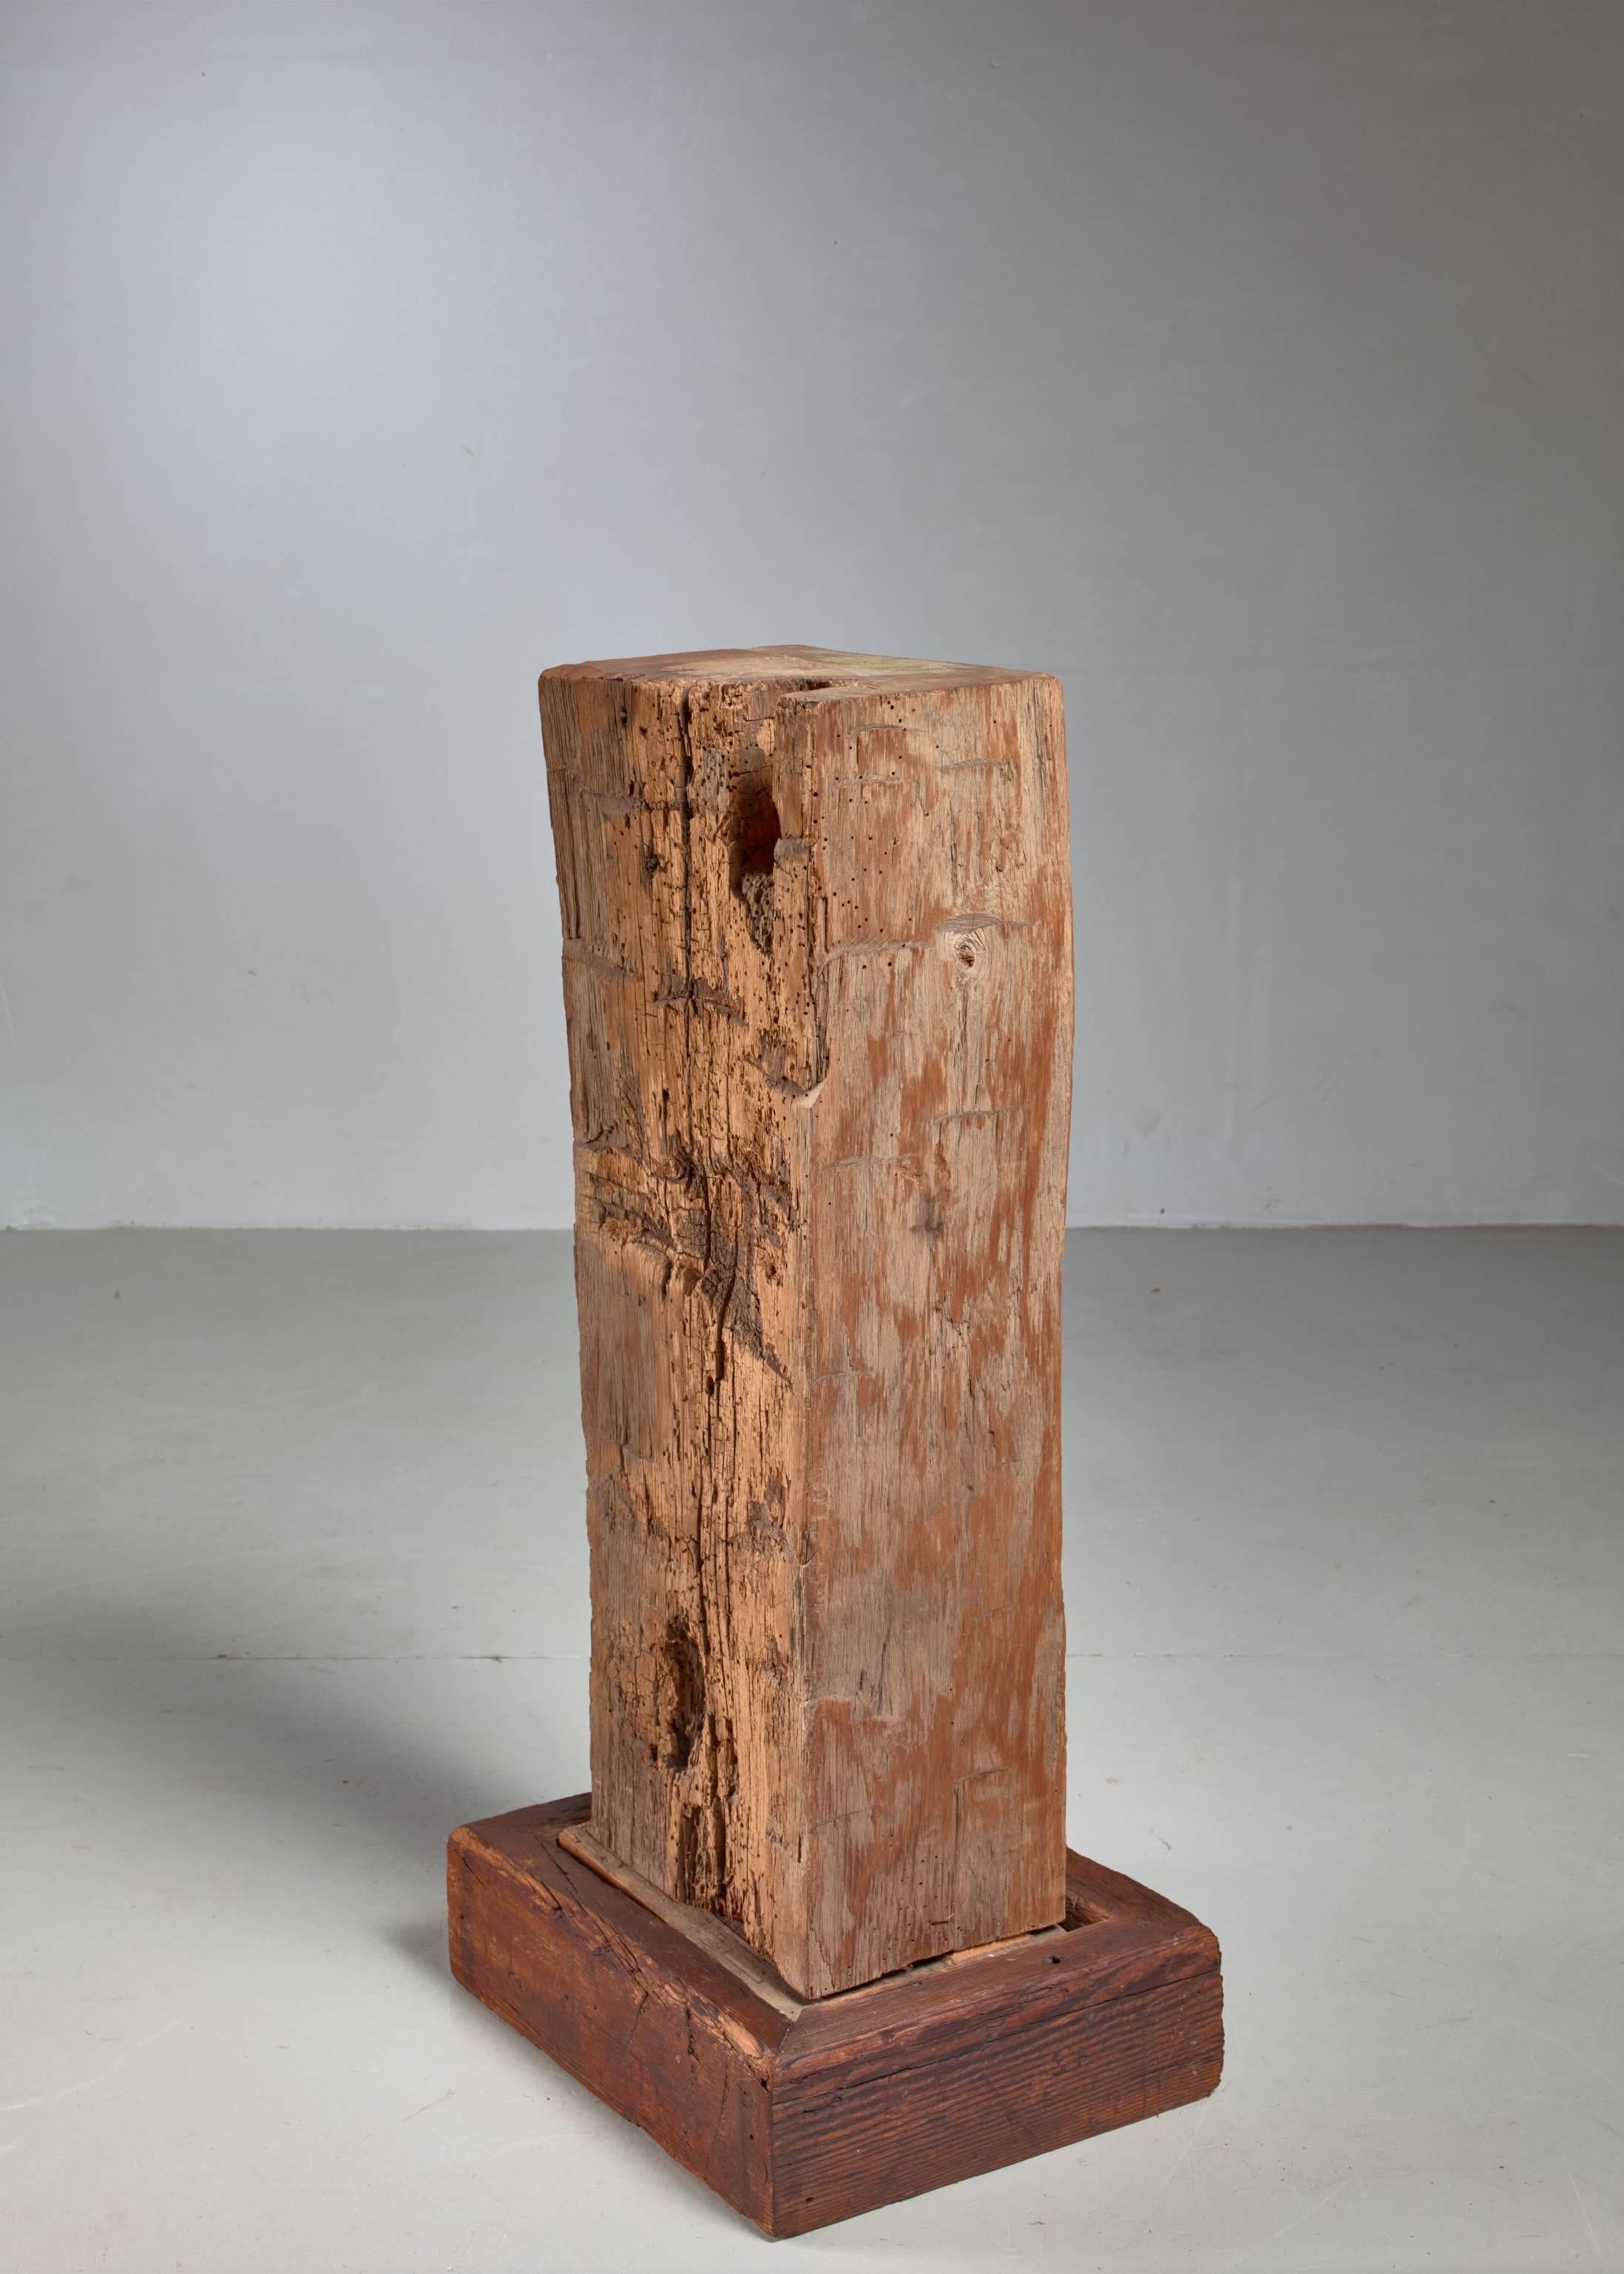 American Craftsman David Rogers Wooden Sculpture or Pedestal, USA, 1980s